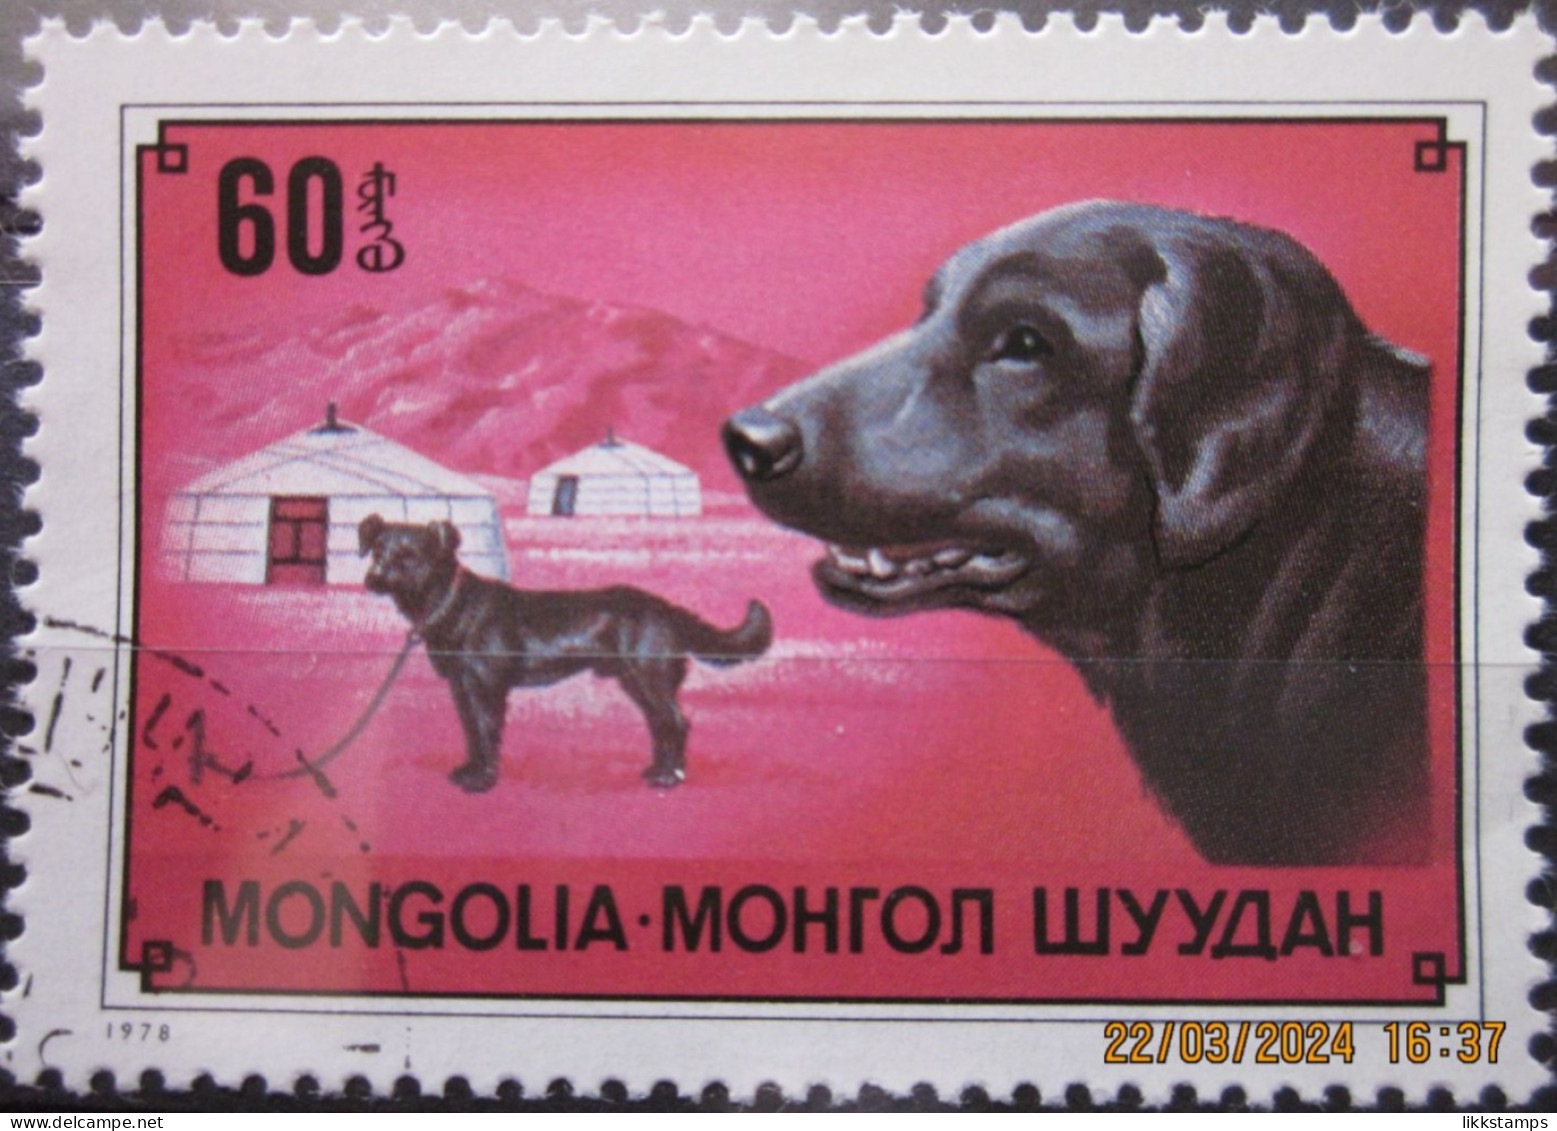 MONGOLIA ~ 1978 ~ S.G. NUMBERS 1157, ~ DOGS. ~ VFU #03479 - Mongolei